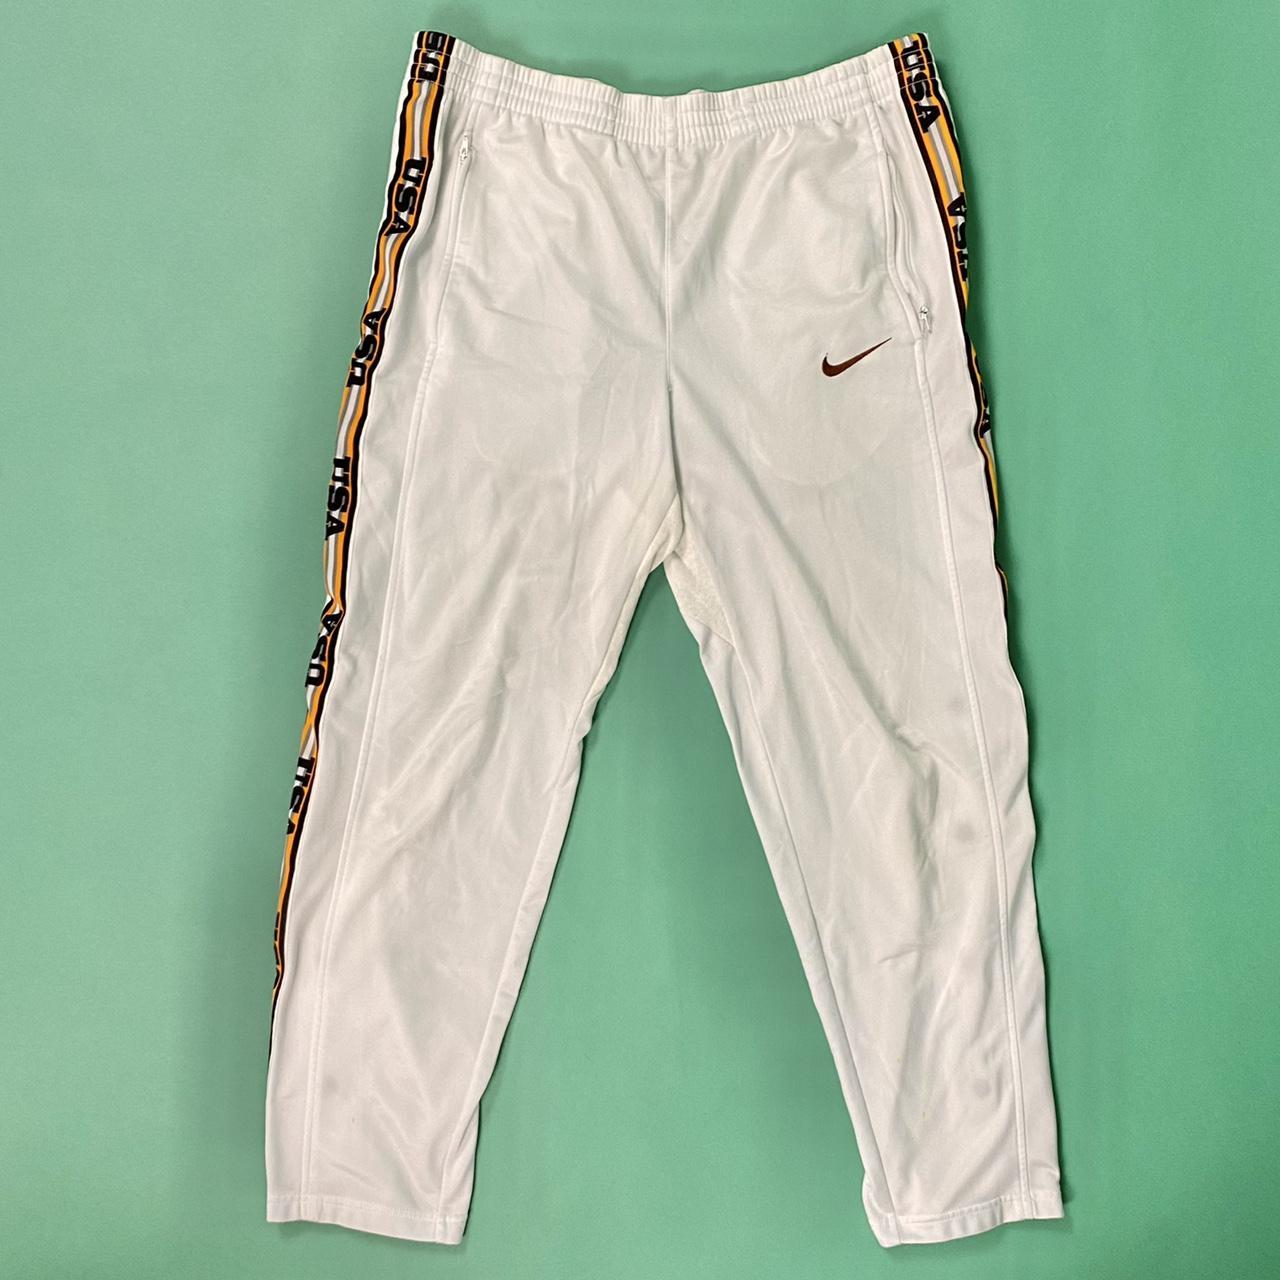 Vintage rare early 90s white Nike popper joggers /... - Depop